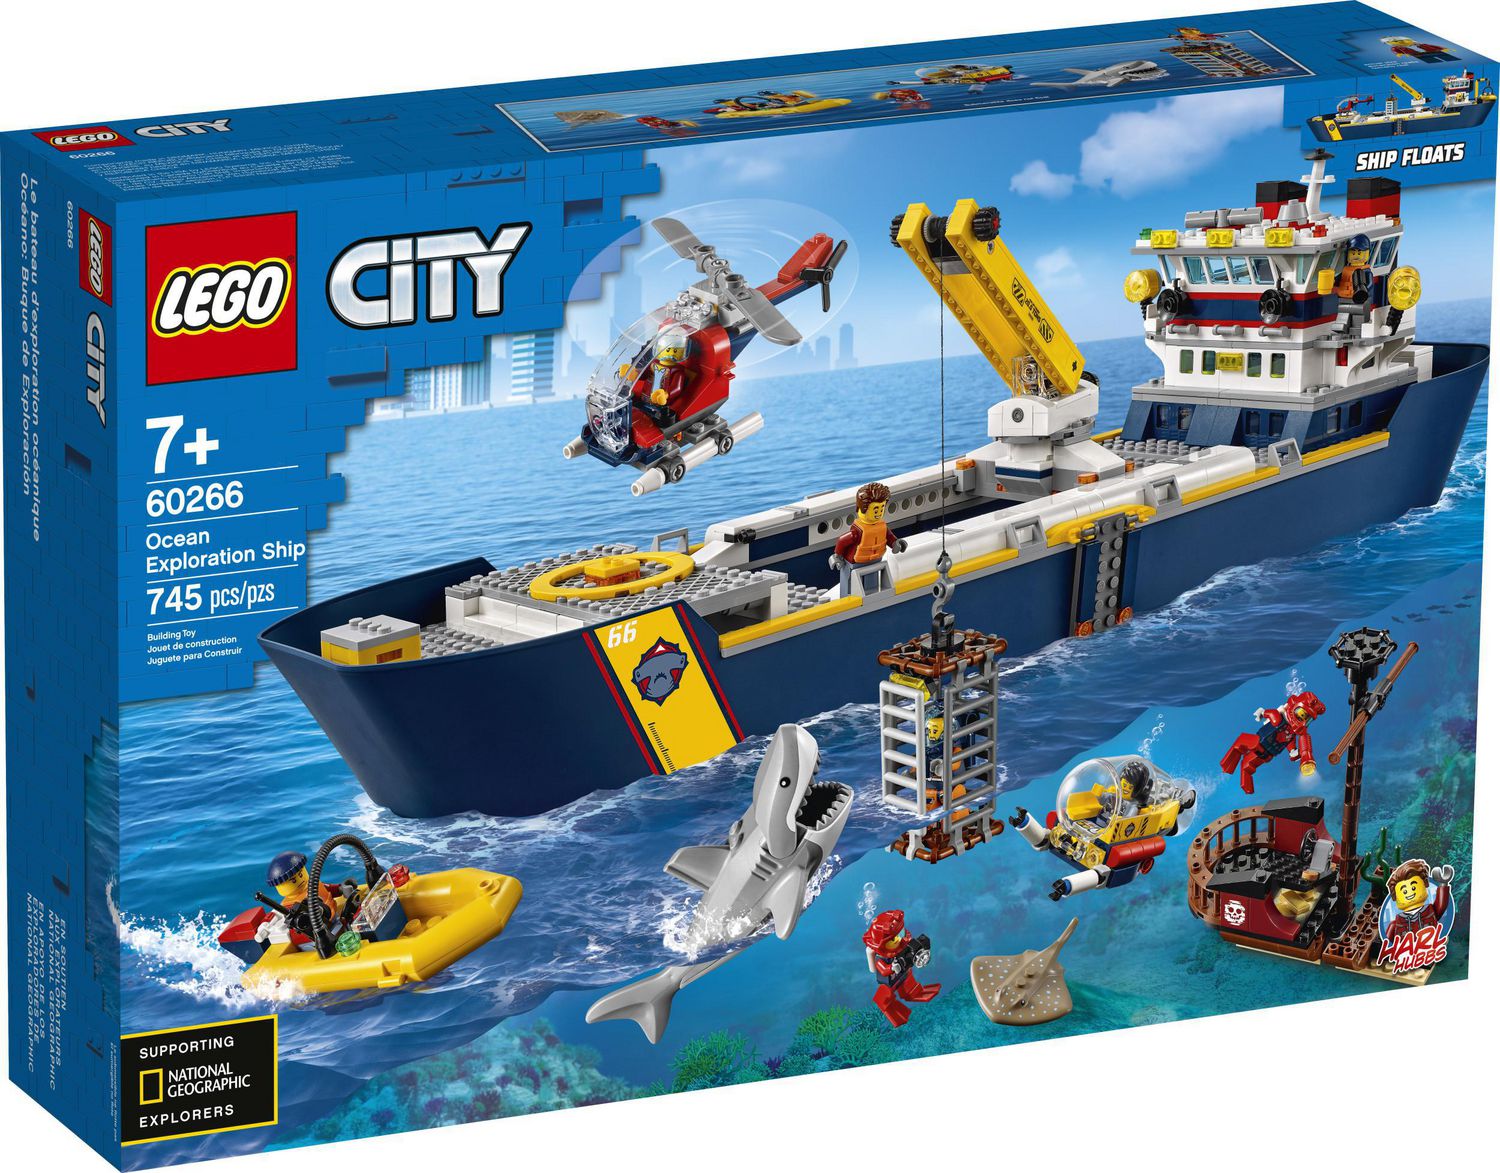 LEGO City Ocean Exploration Ship 60266 Toy Building Kit (745